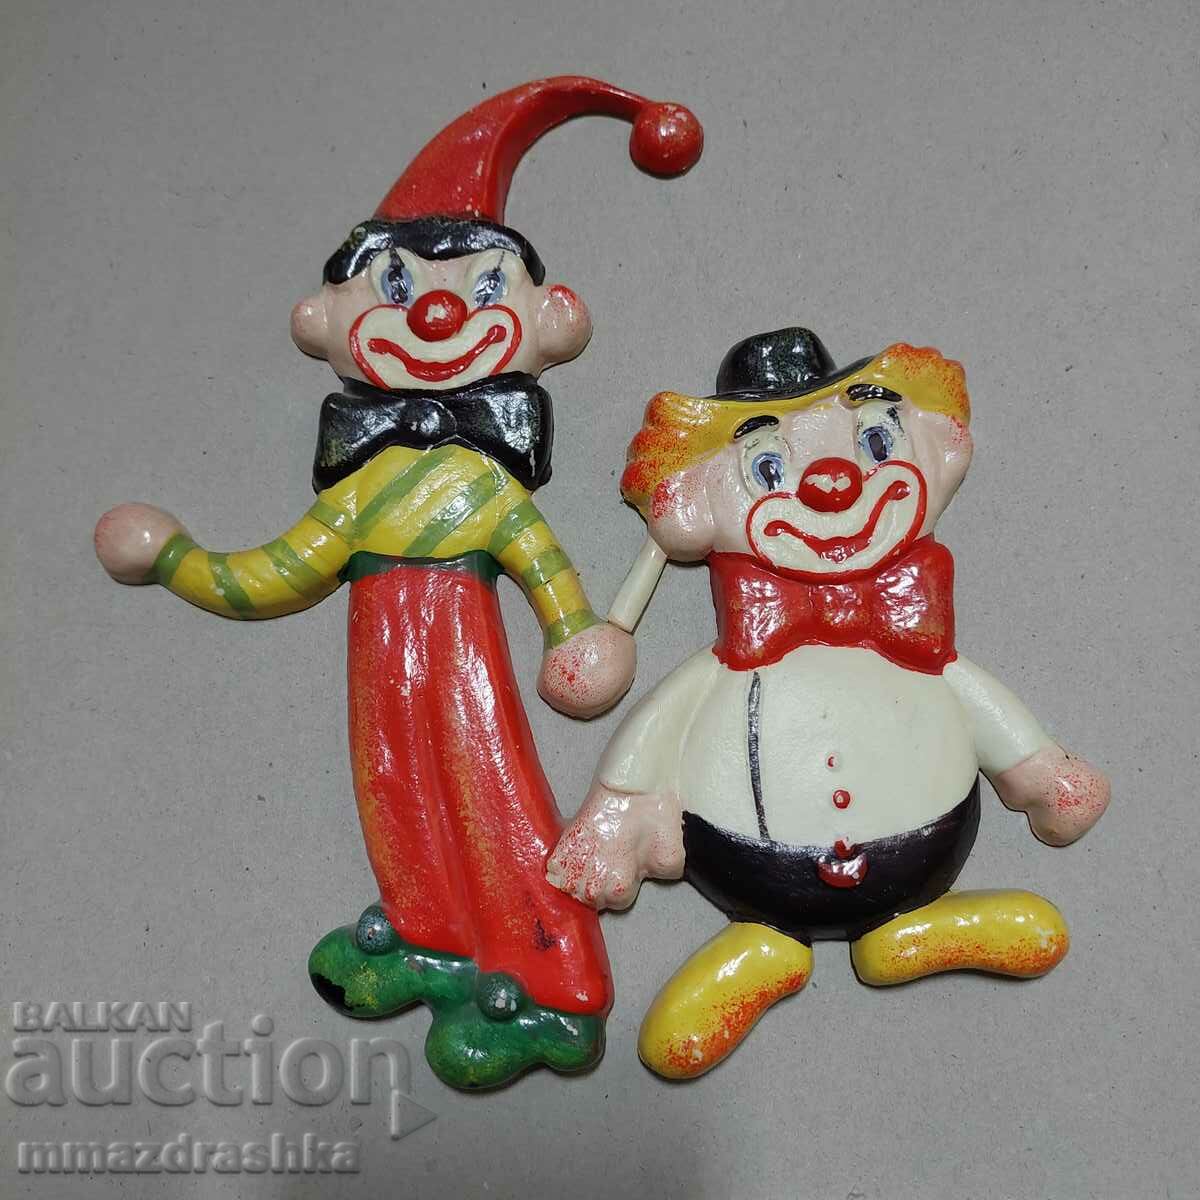 Laurel and Hardy, Soca Clowns